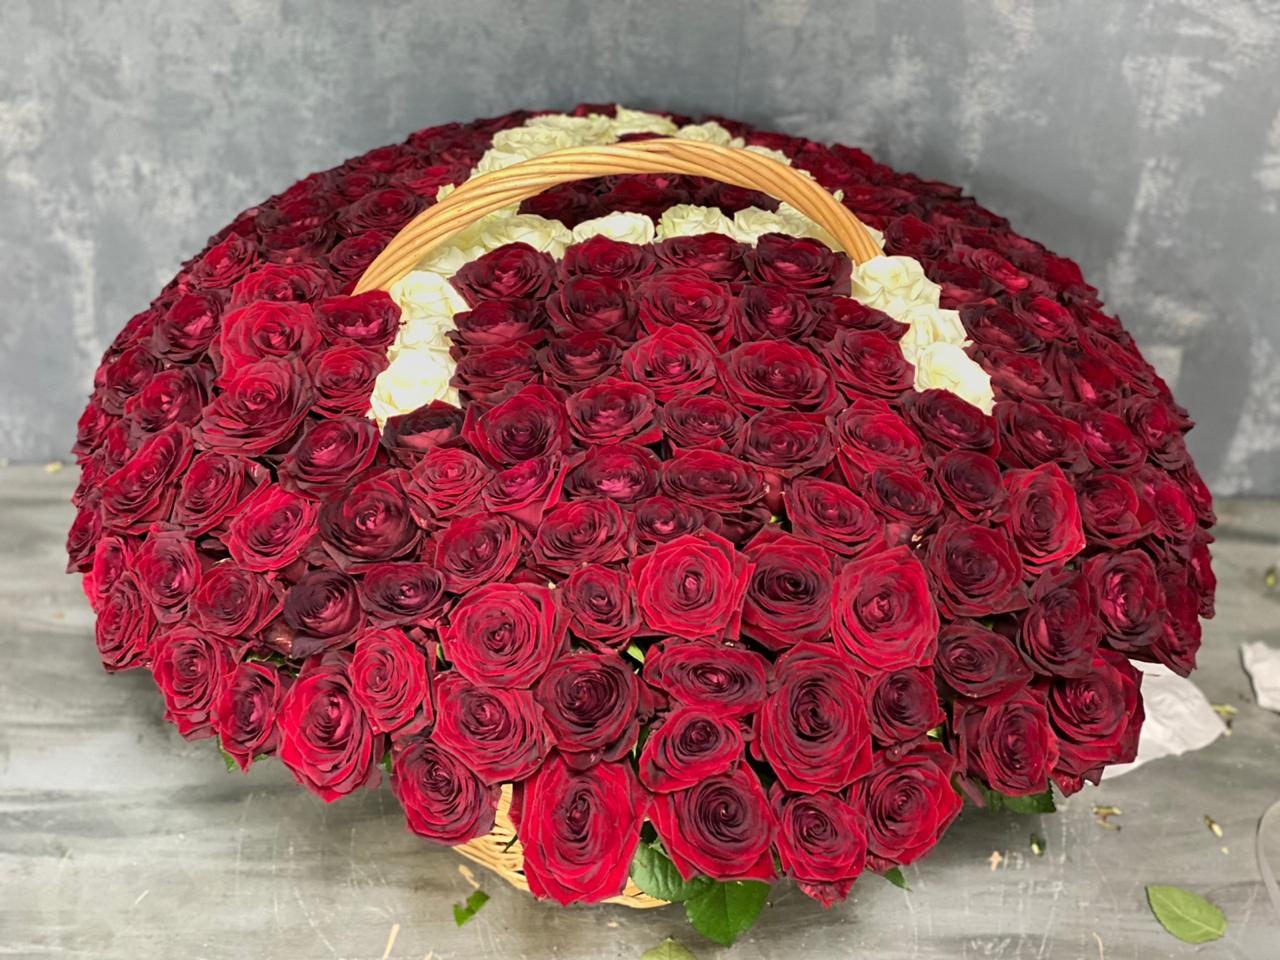 Траурная корзина из 250 красных роз с буквой "А"